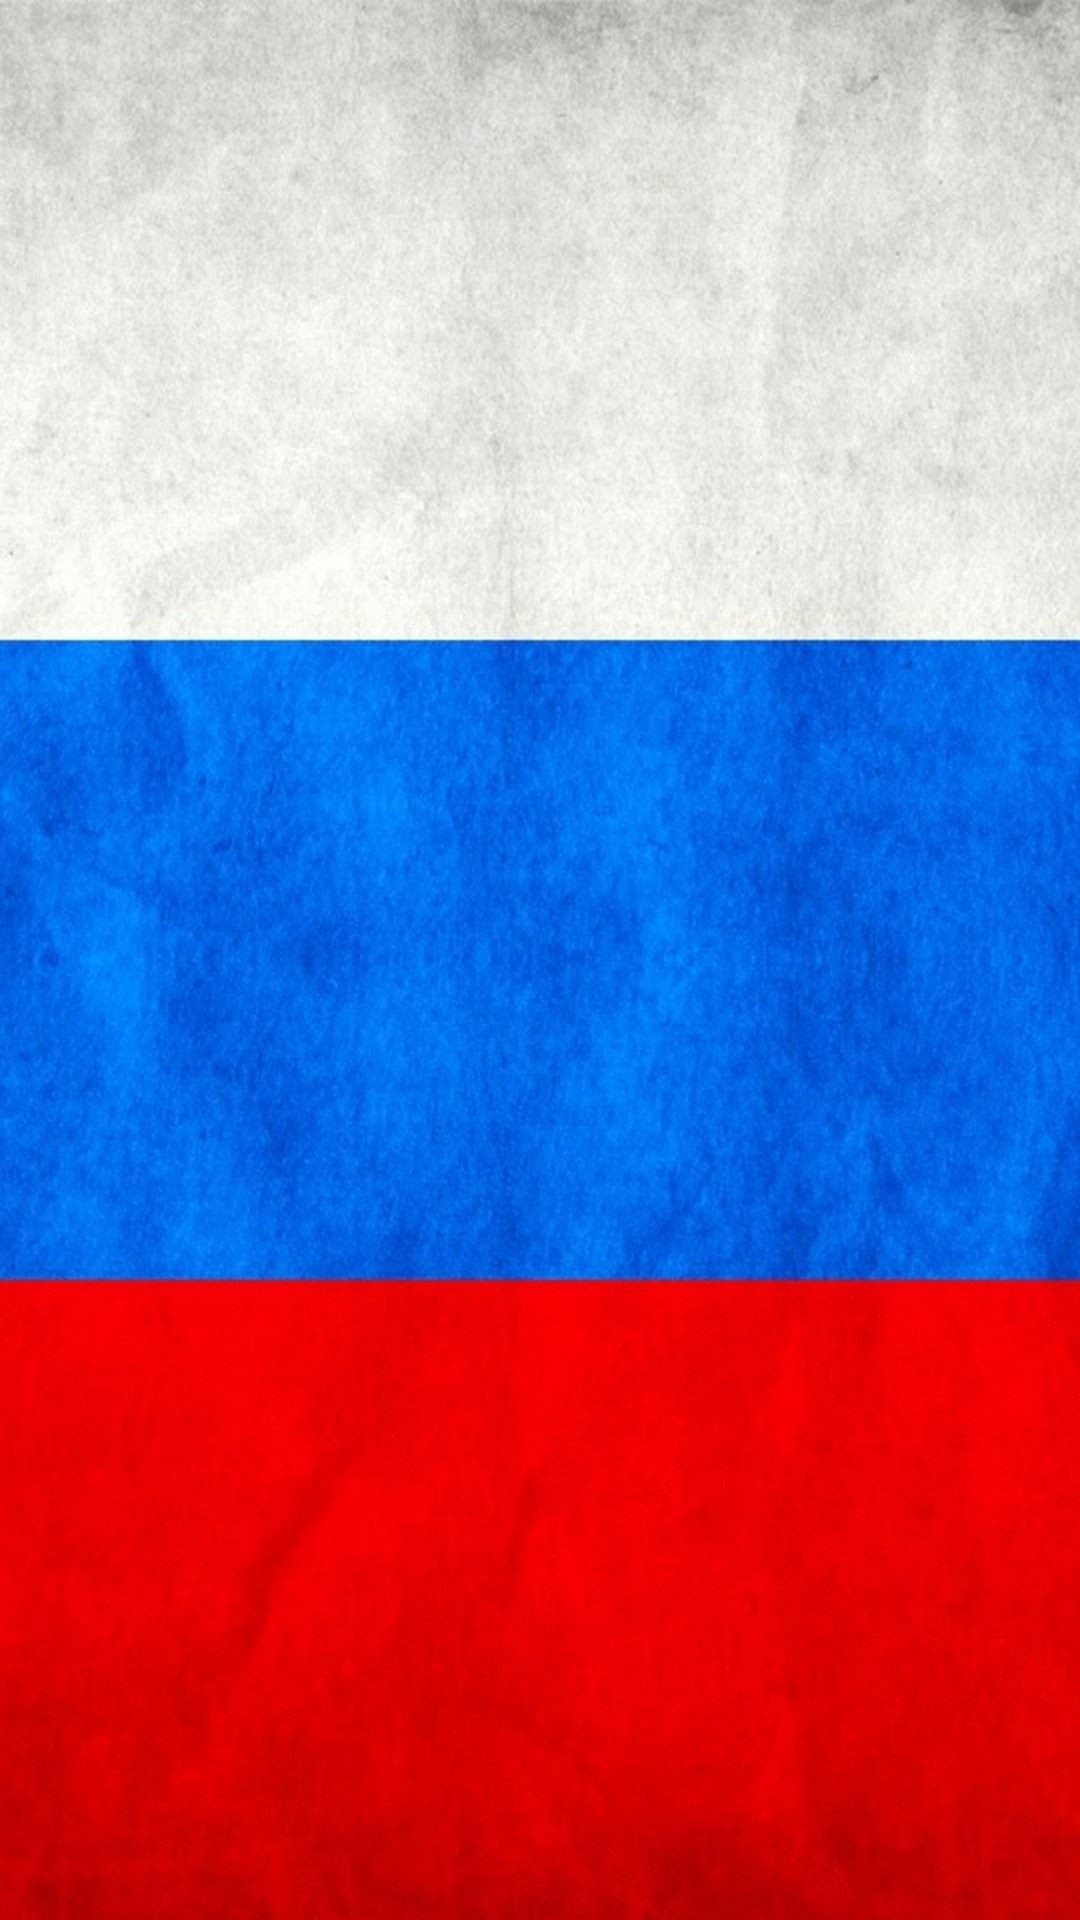 1080x1920 Russia Flag iPhone 6 Plus HD Wallpaper.jpg 1,080Ã1,920 pixels